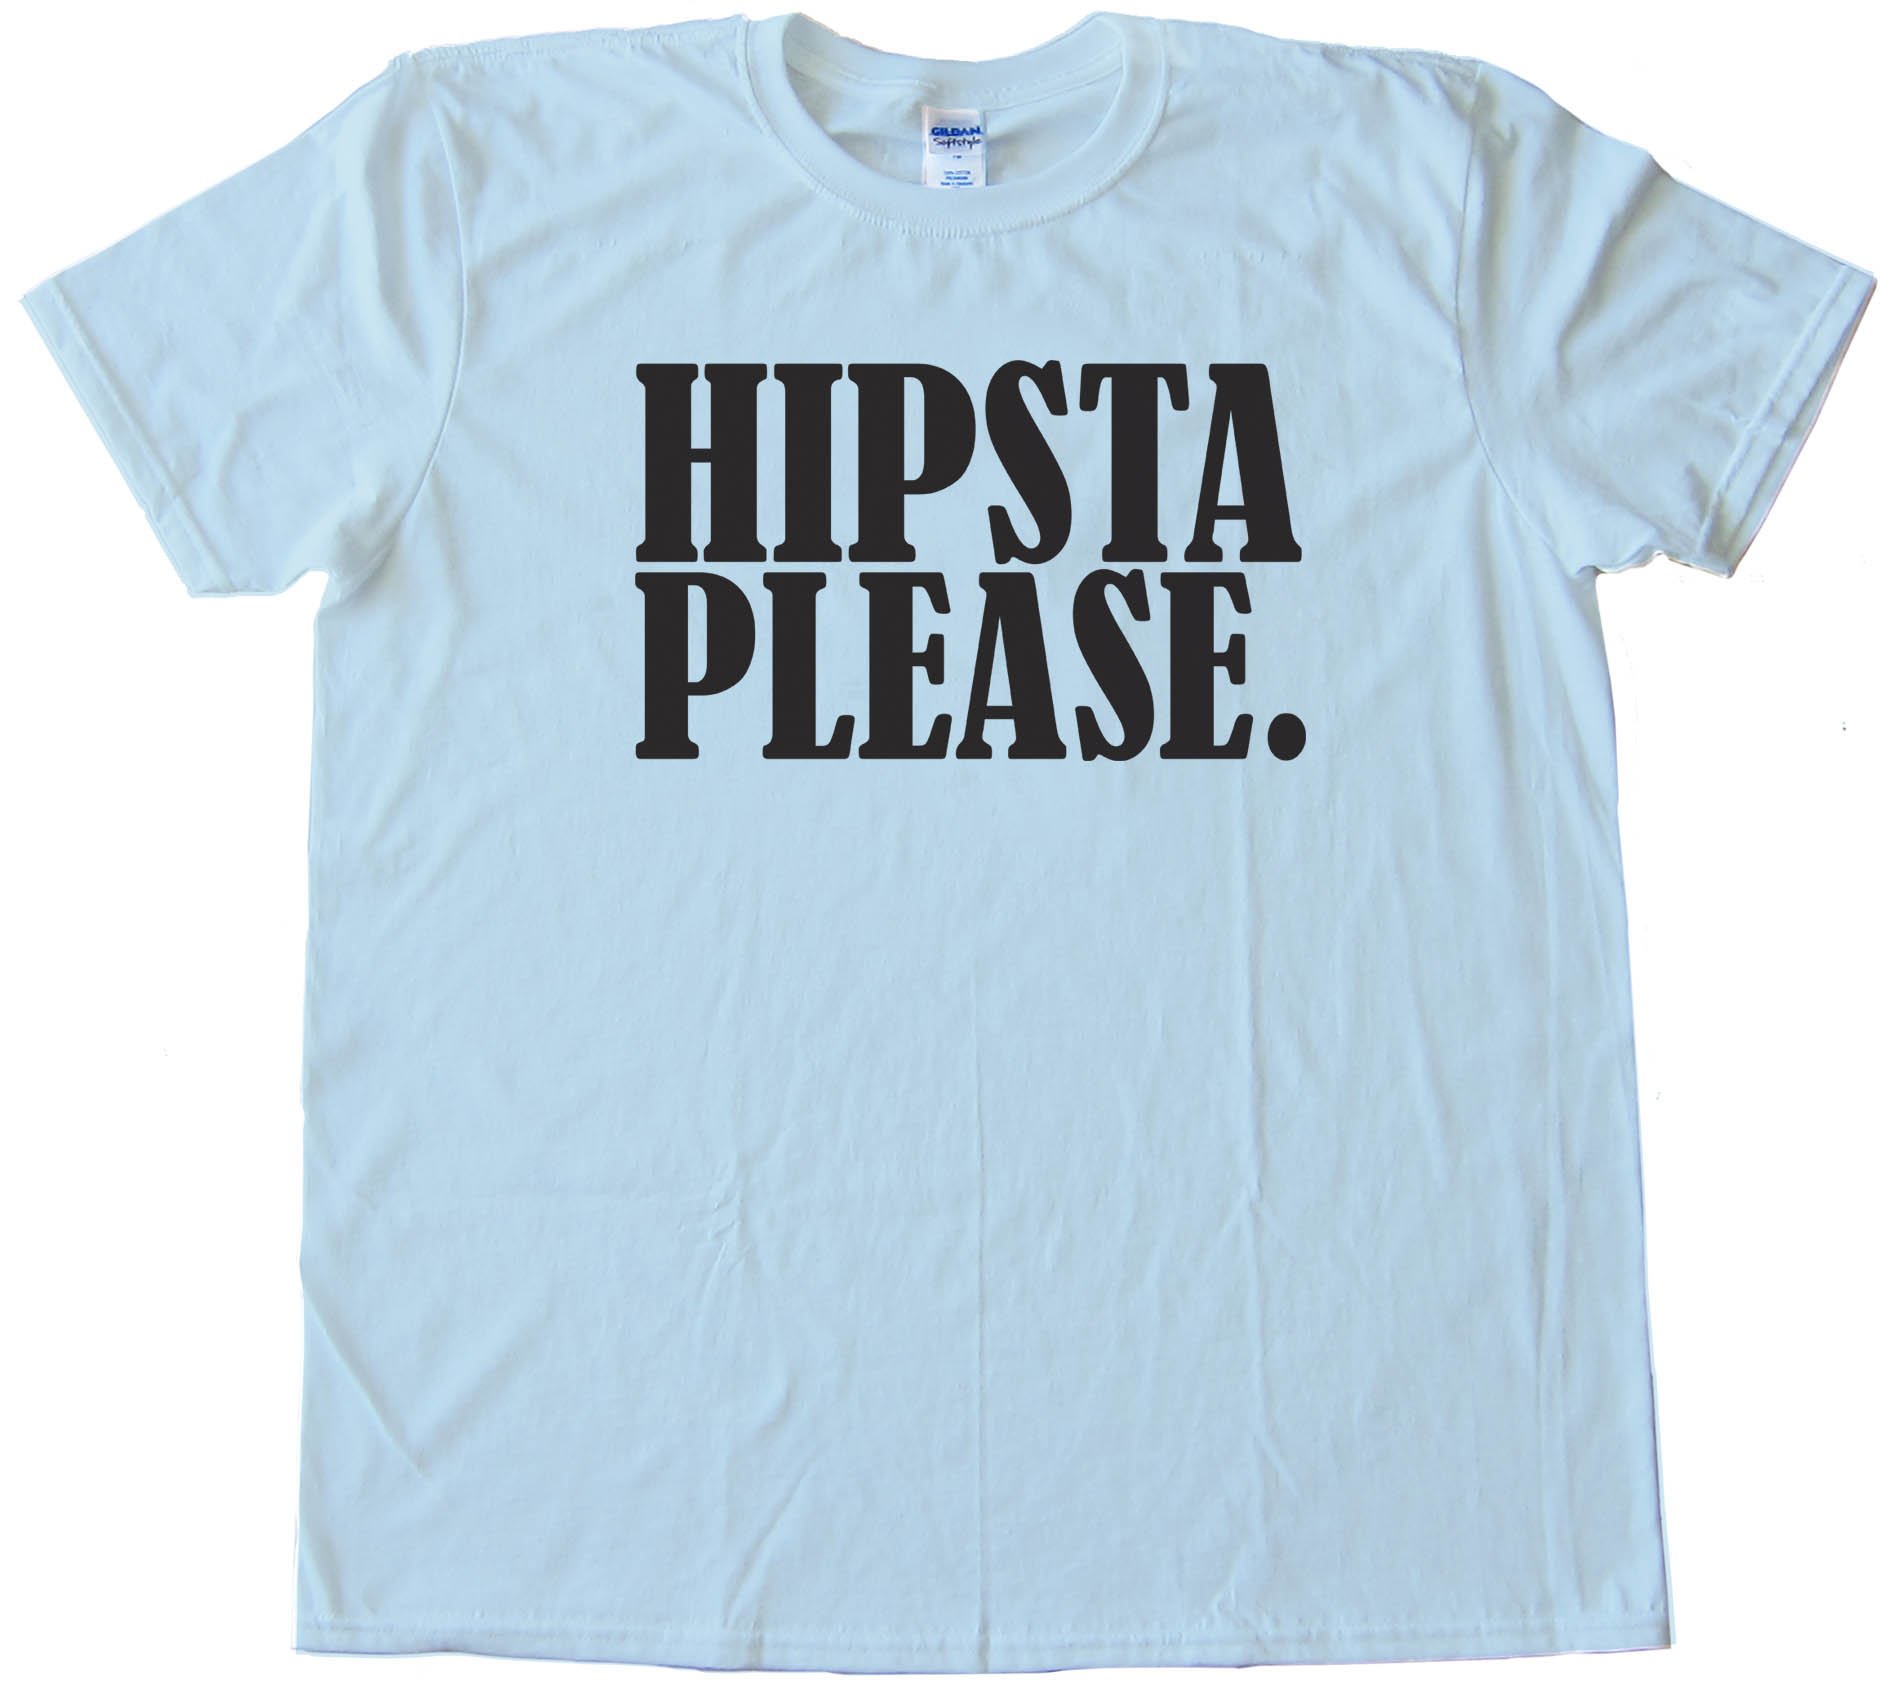 Hipsta Please. - Tee Shirt